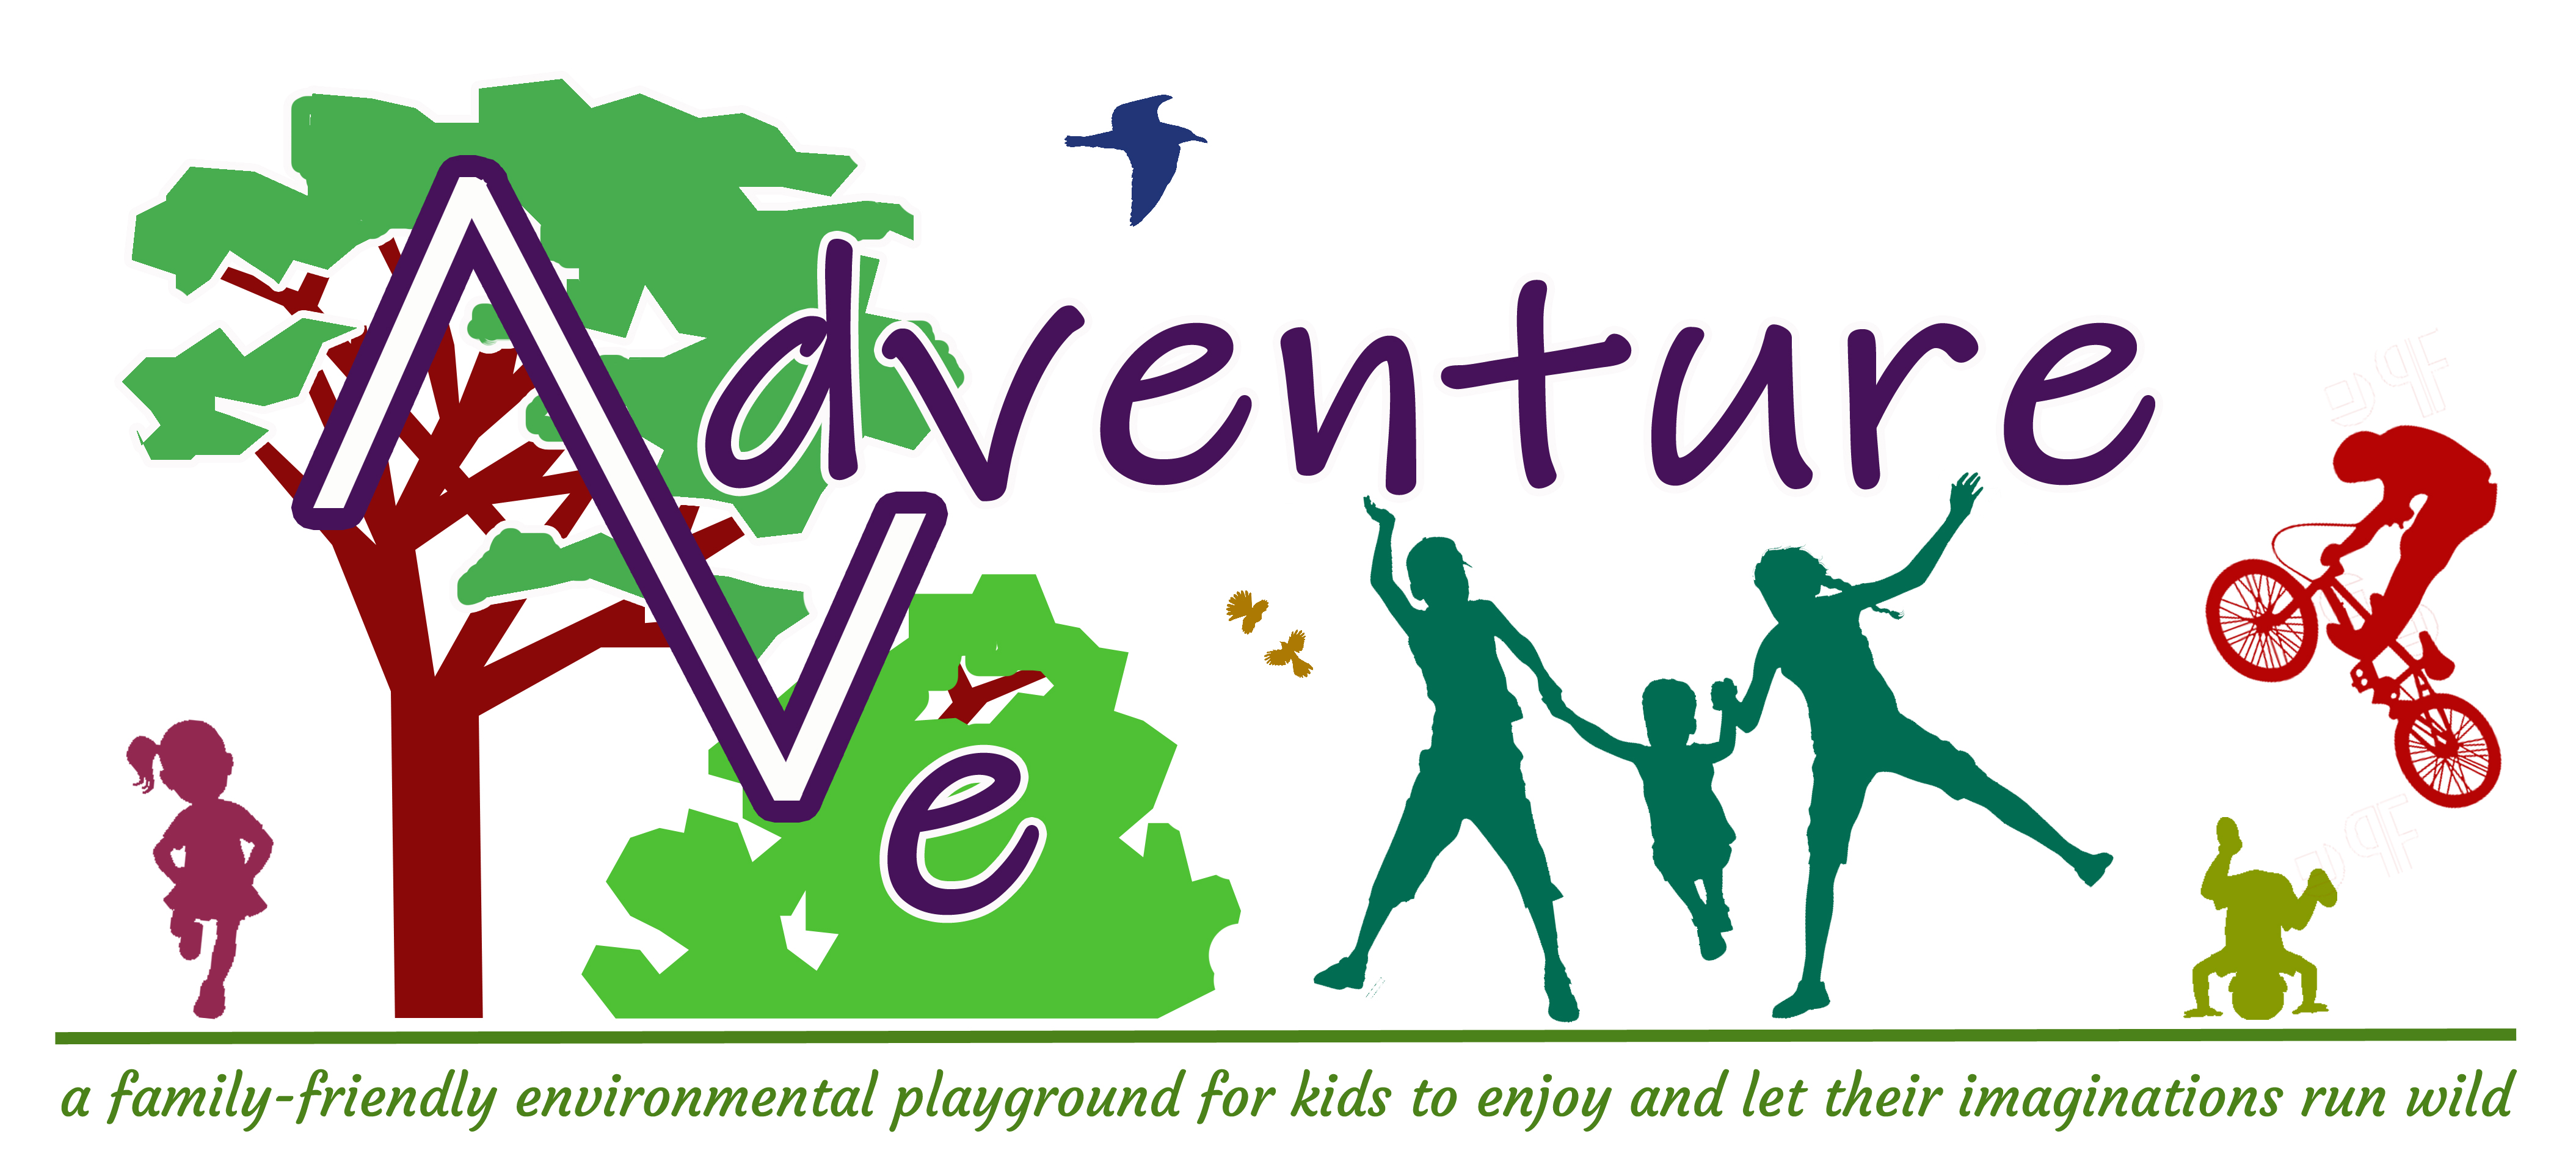 adventure ave logo Colourised.jpg